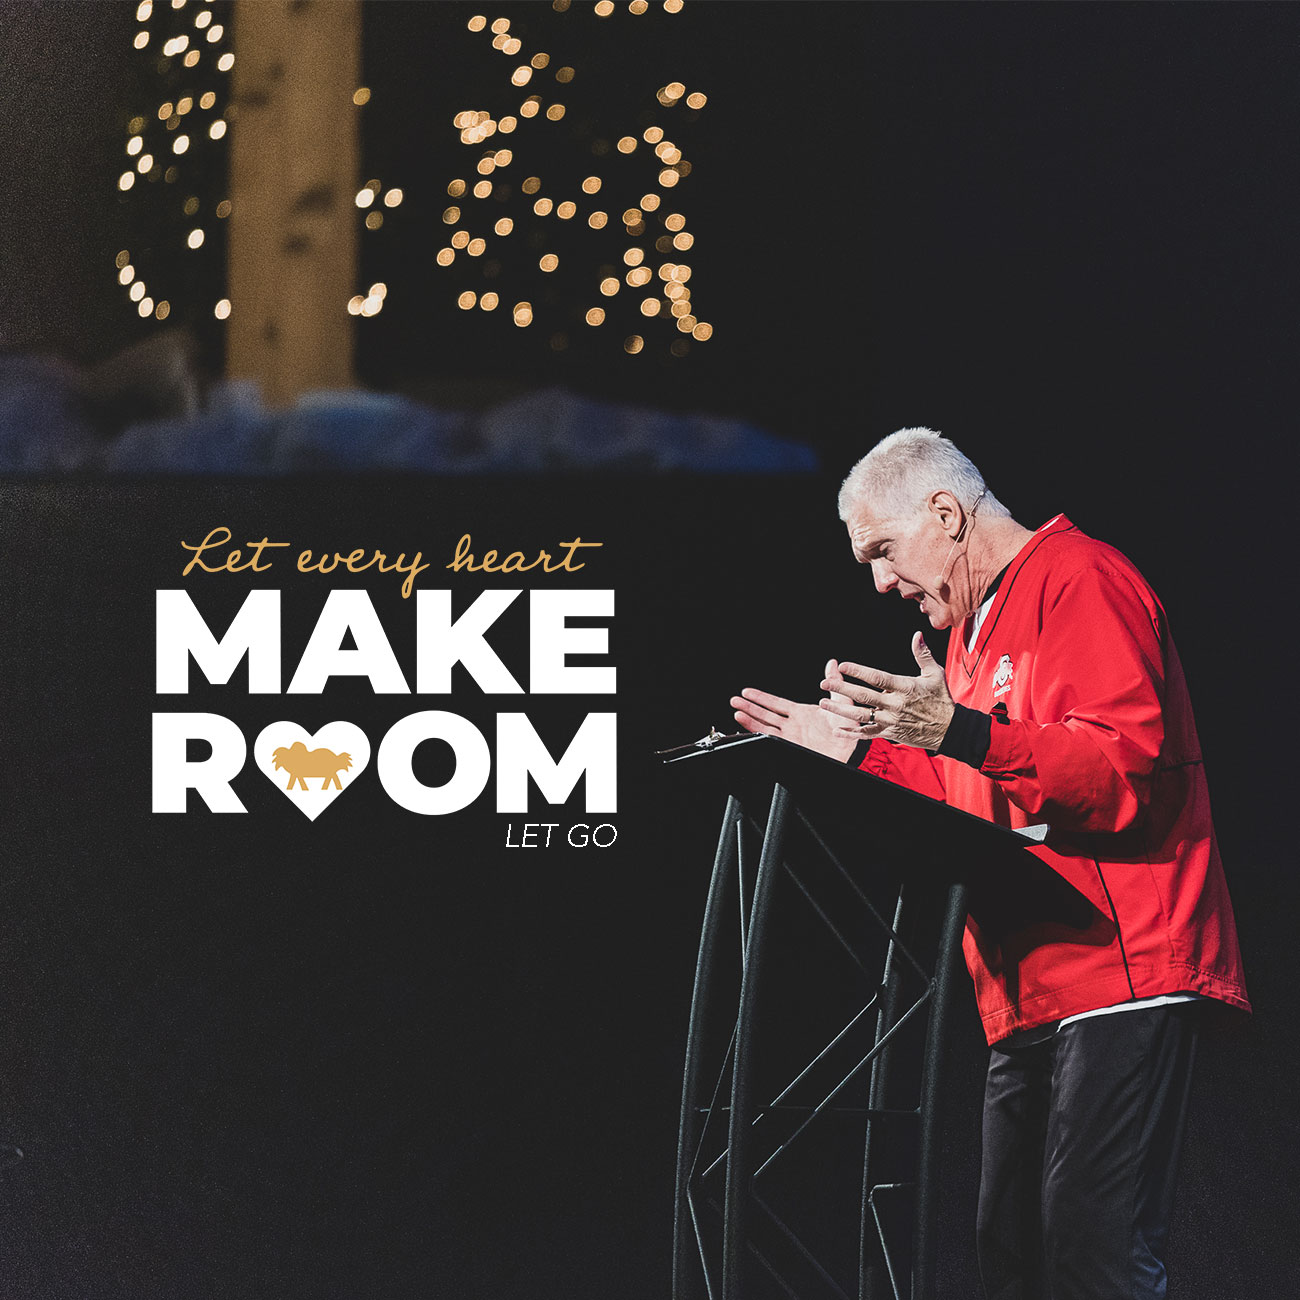 [let every heart] Make Room: Let Go [Pastor Nathan Ward]